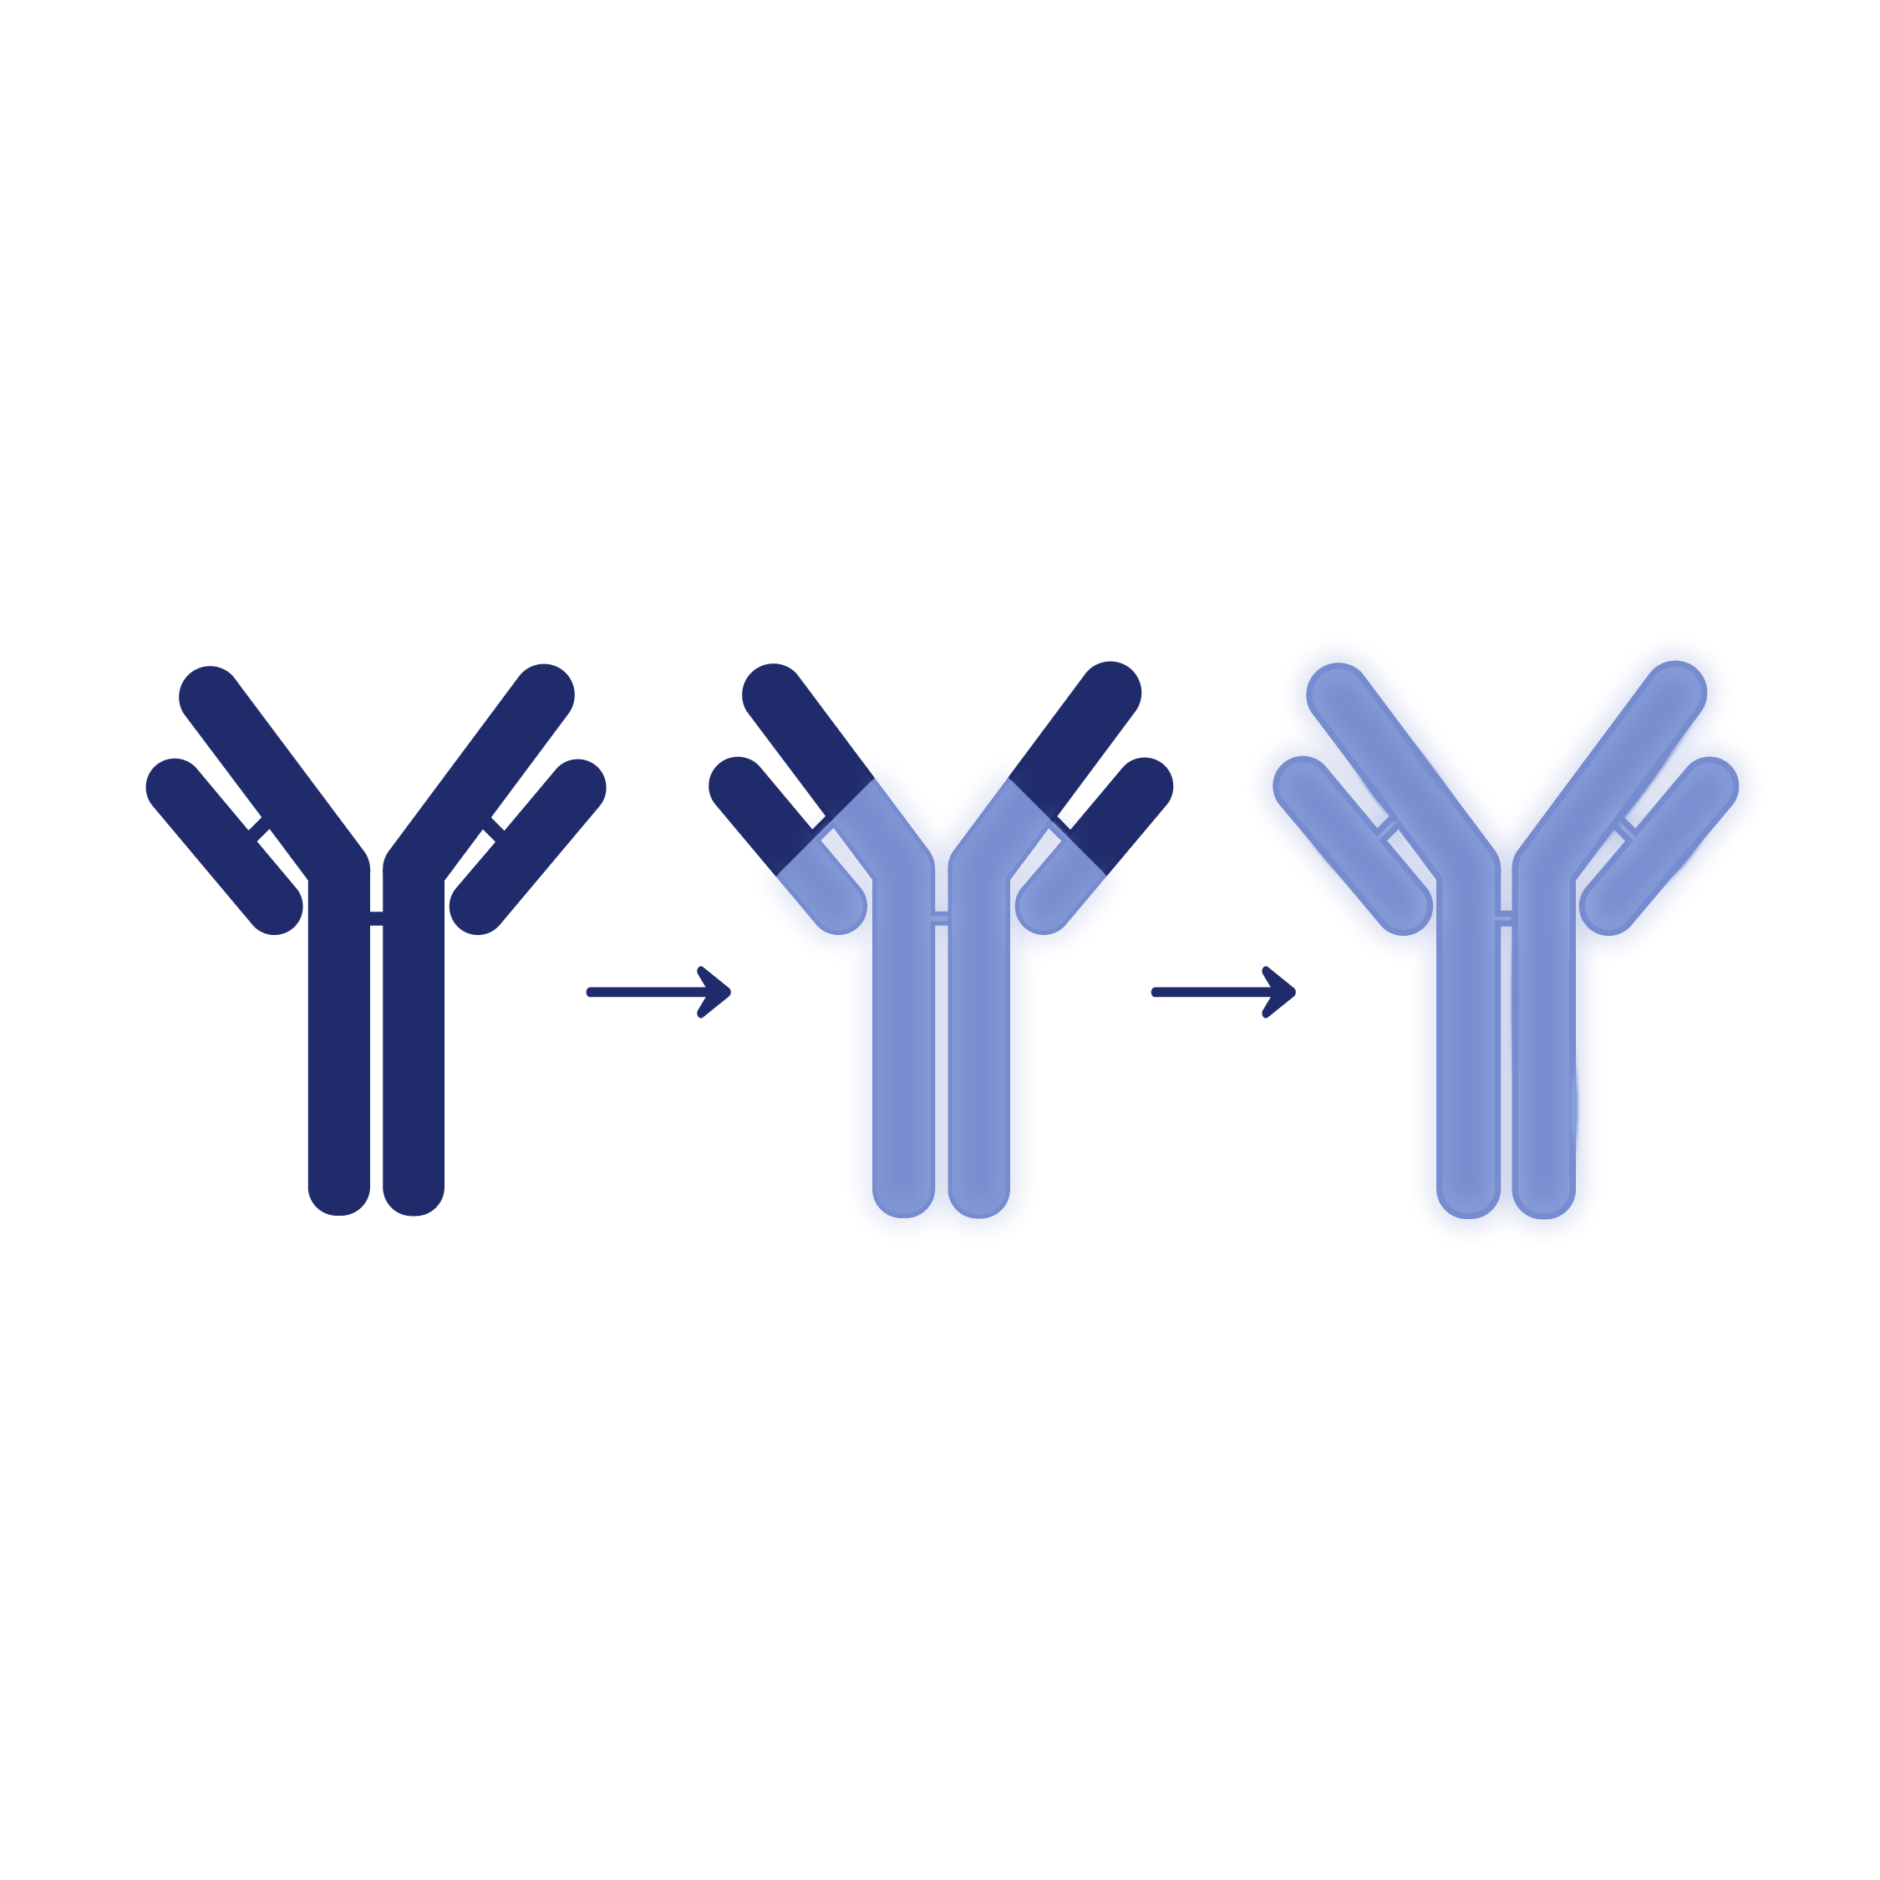 Humanization process shown through antibodies.